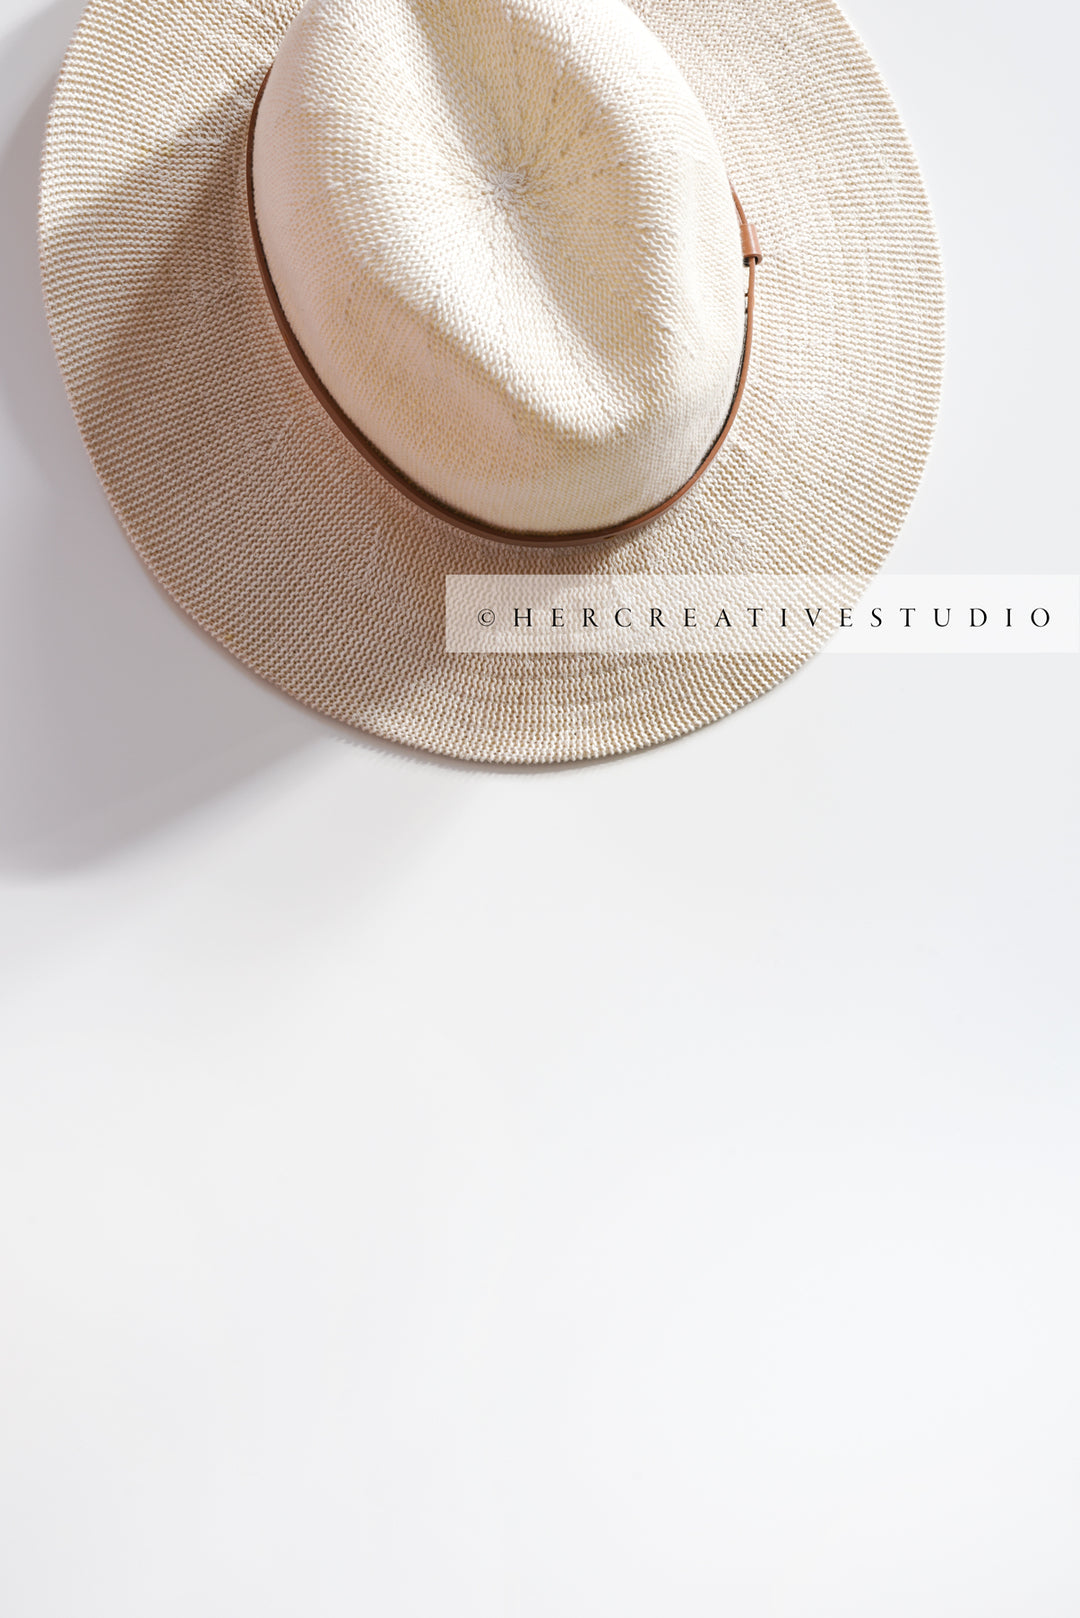 Panaman Hat in Sunlight, Minimal Styled Image